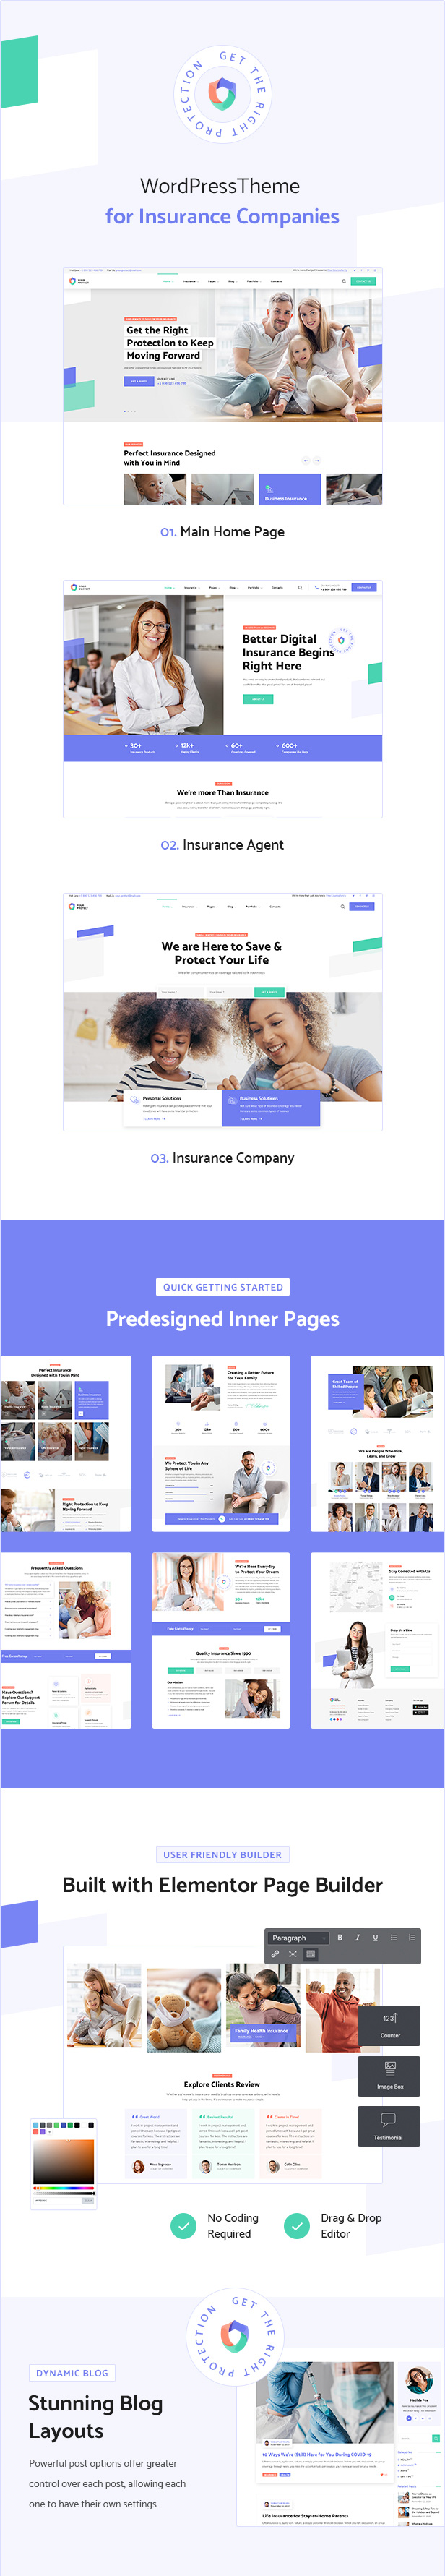 YourProtect - Insurance & Finance WordPress Theme - 1